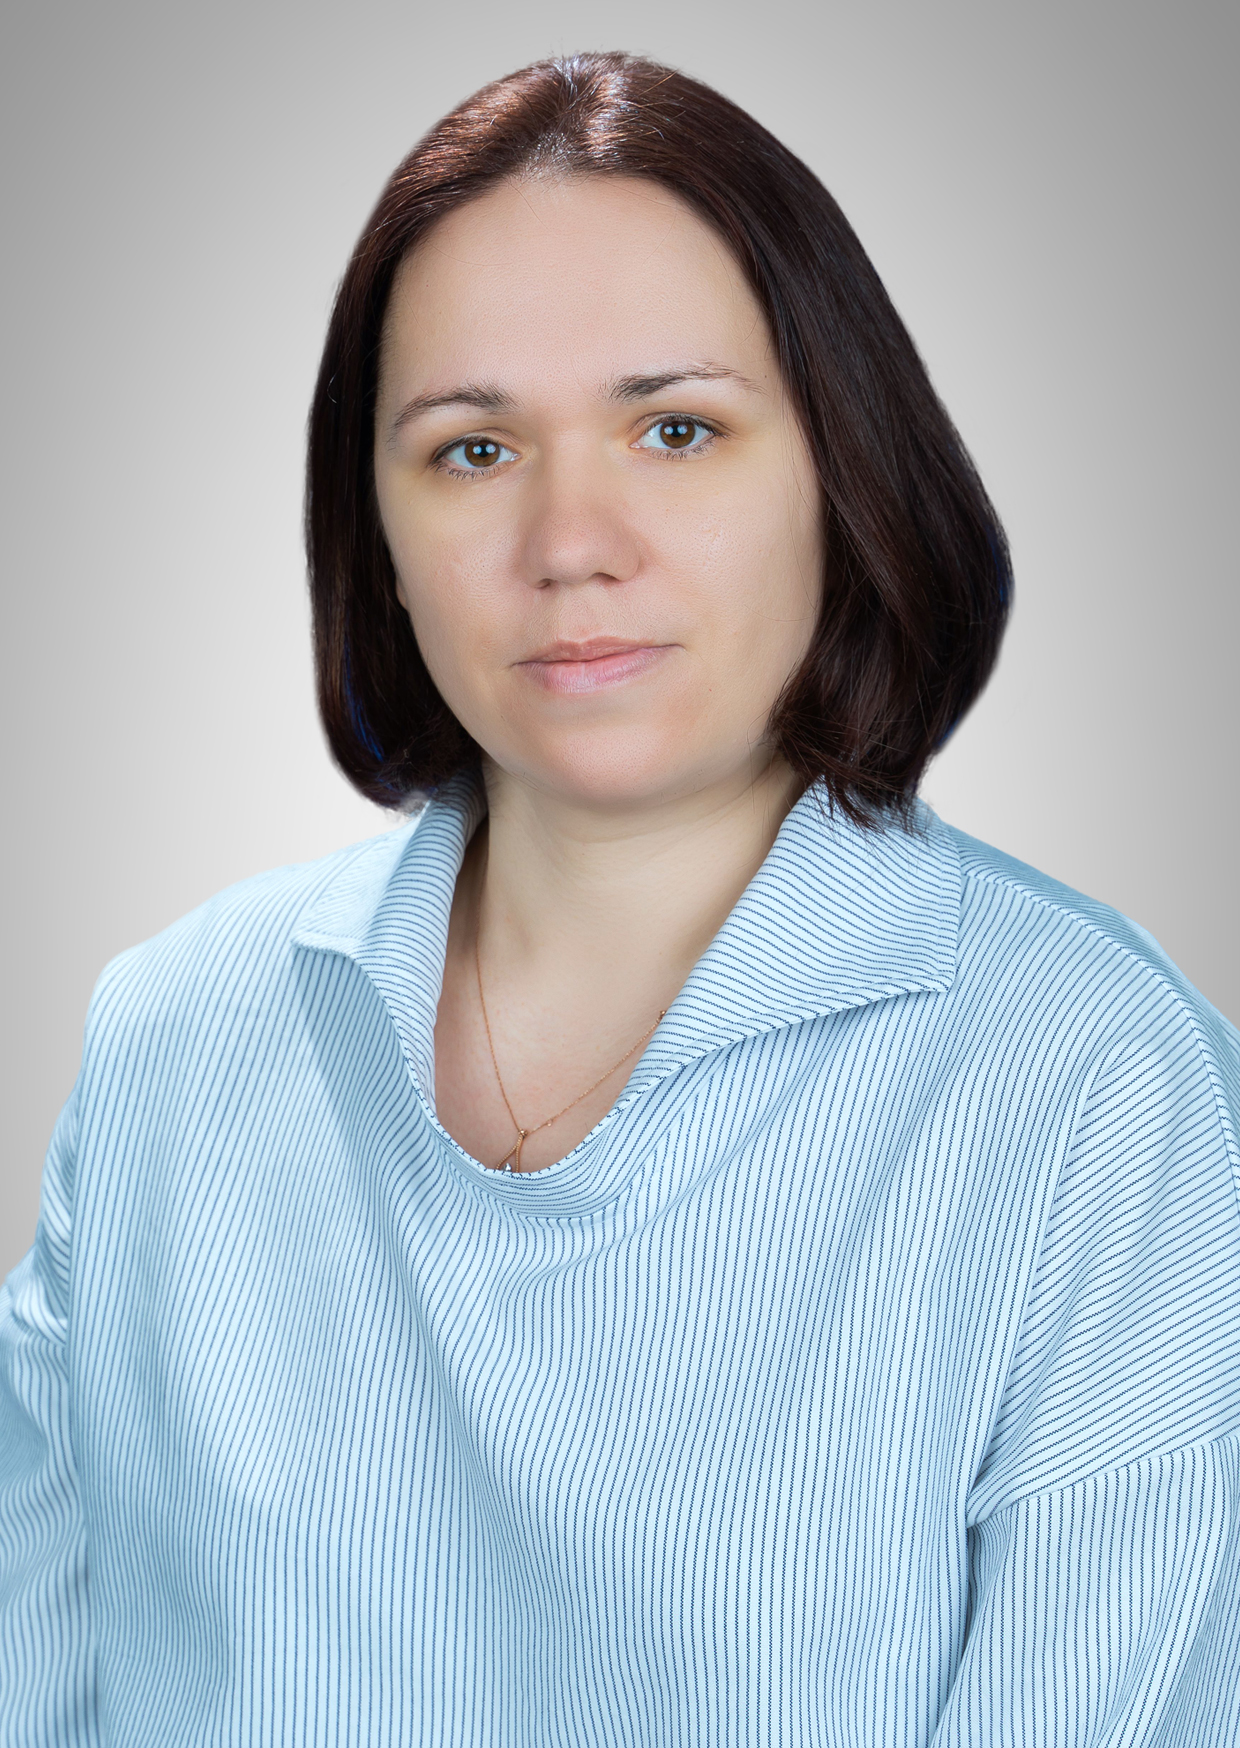 Барышникова Екатерина Николаевна.